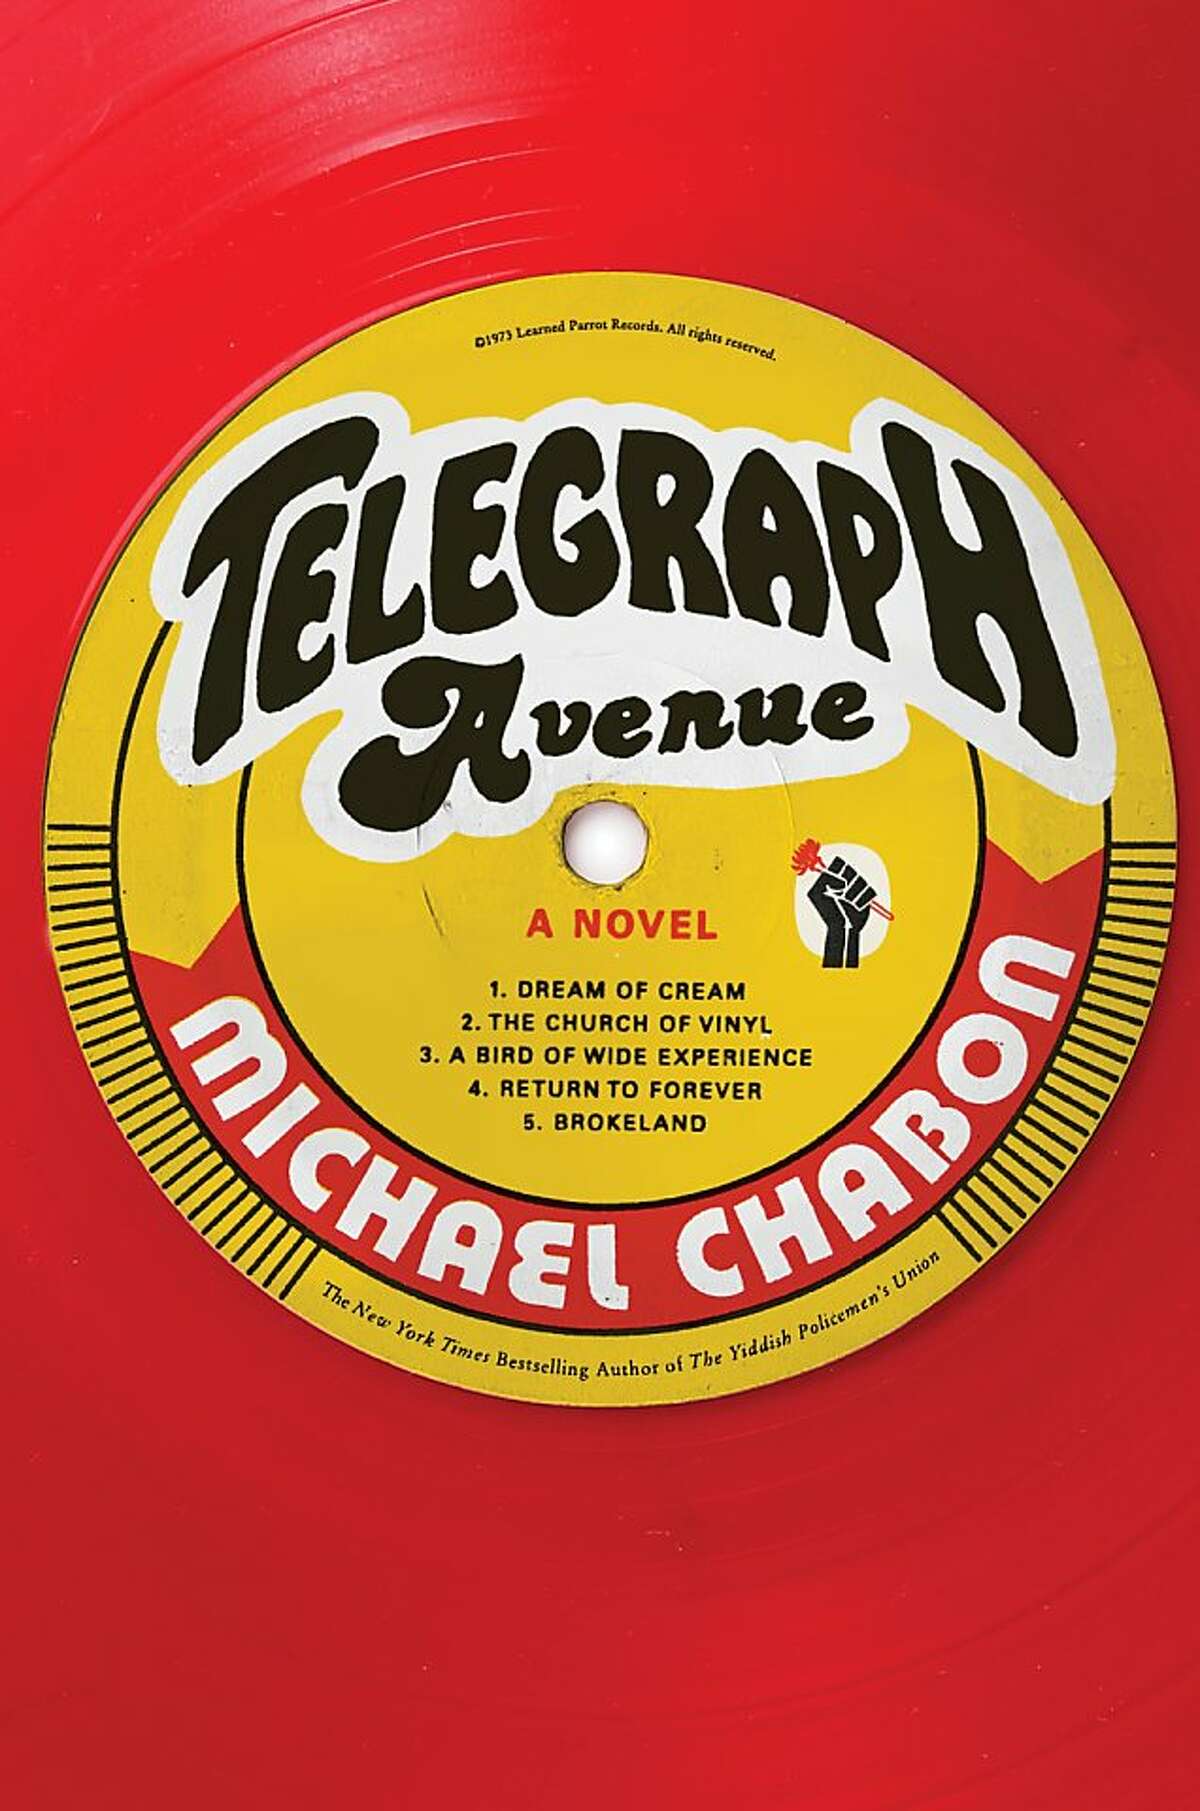 Telegraph Avenue, by Michael Chabon